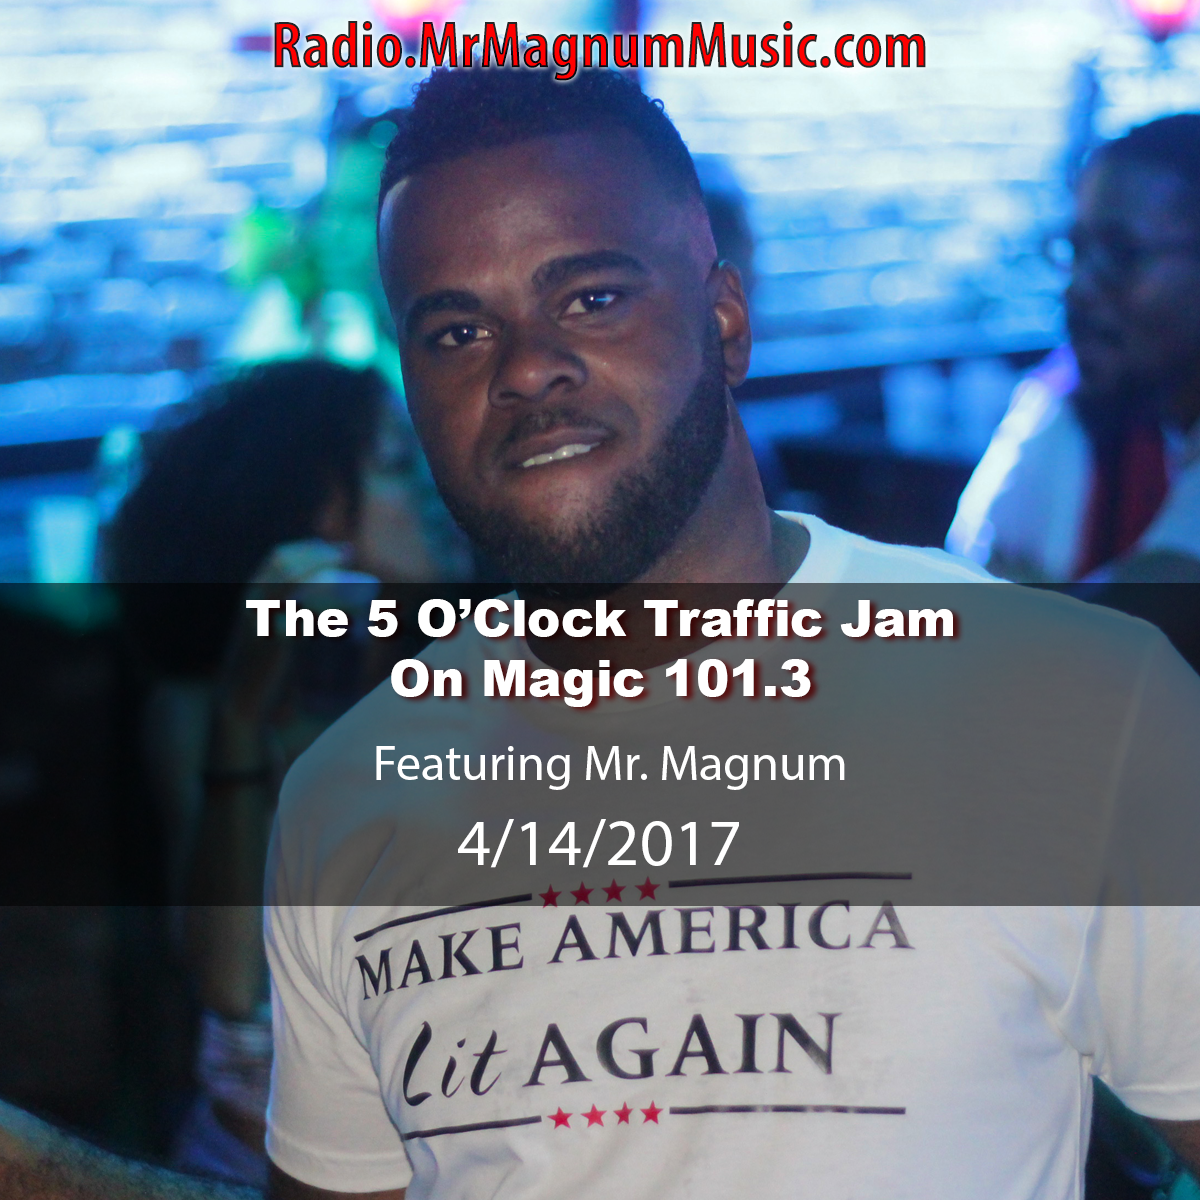 The 5 O'Clock Traffic Jam 20170414 featuring Gainesville's #1 DJ, Mr. Magnum on Magic 101.3